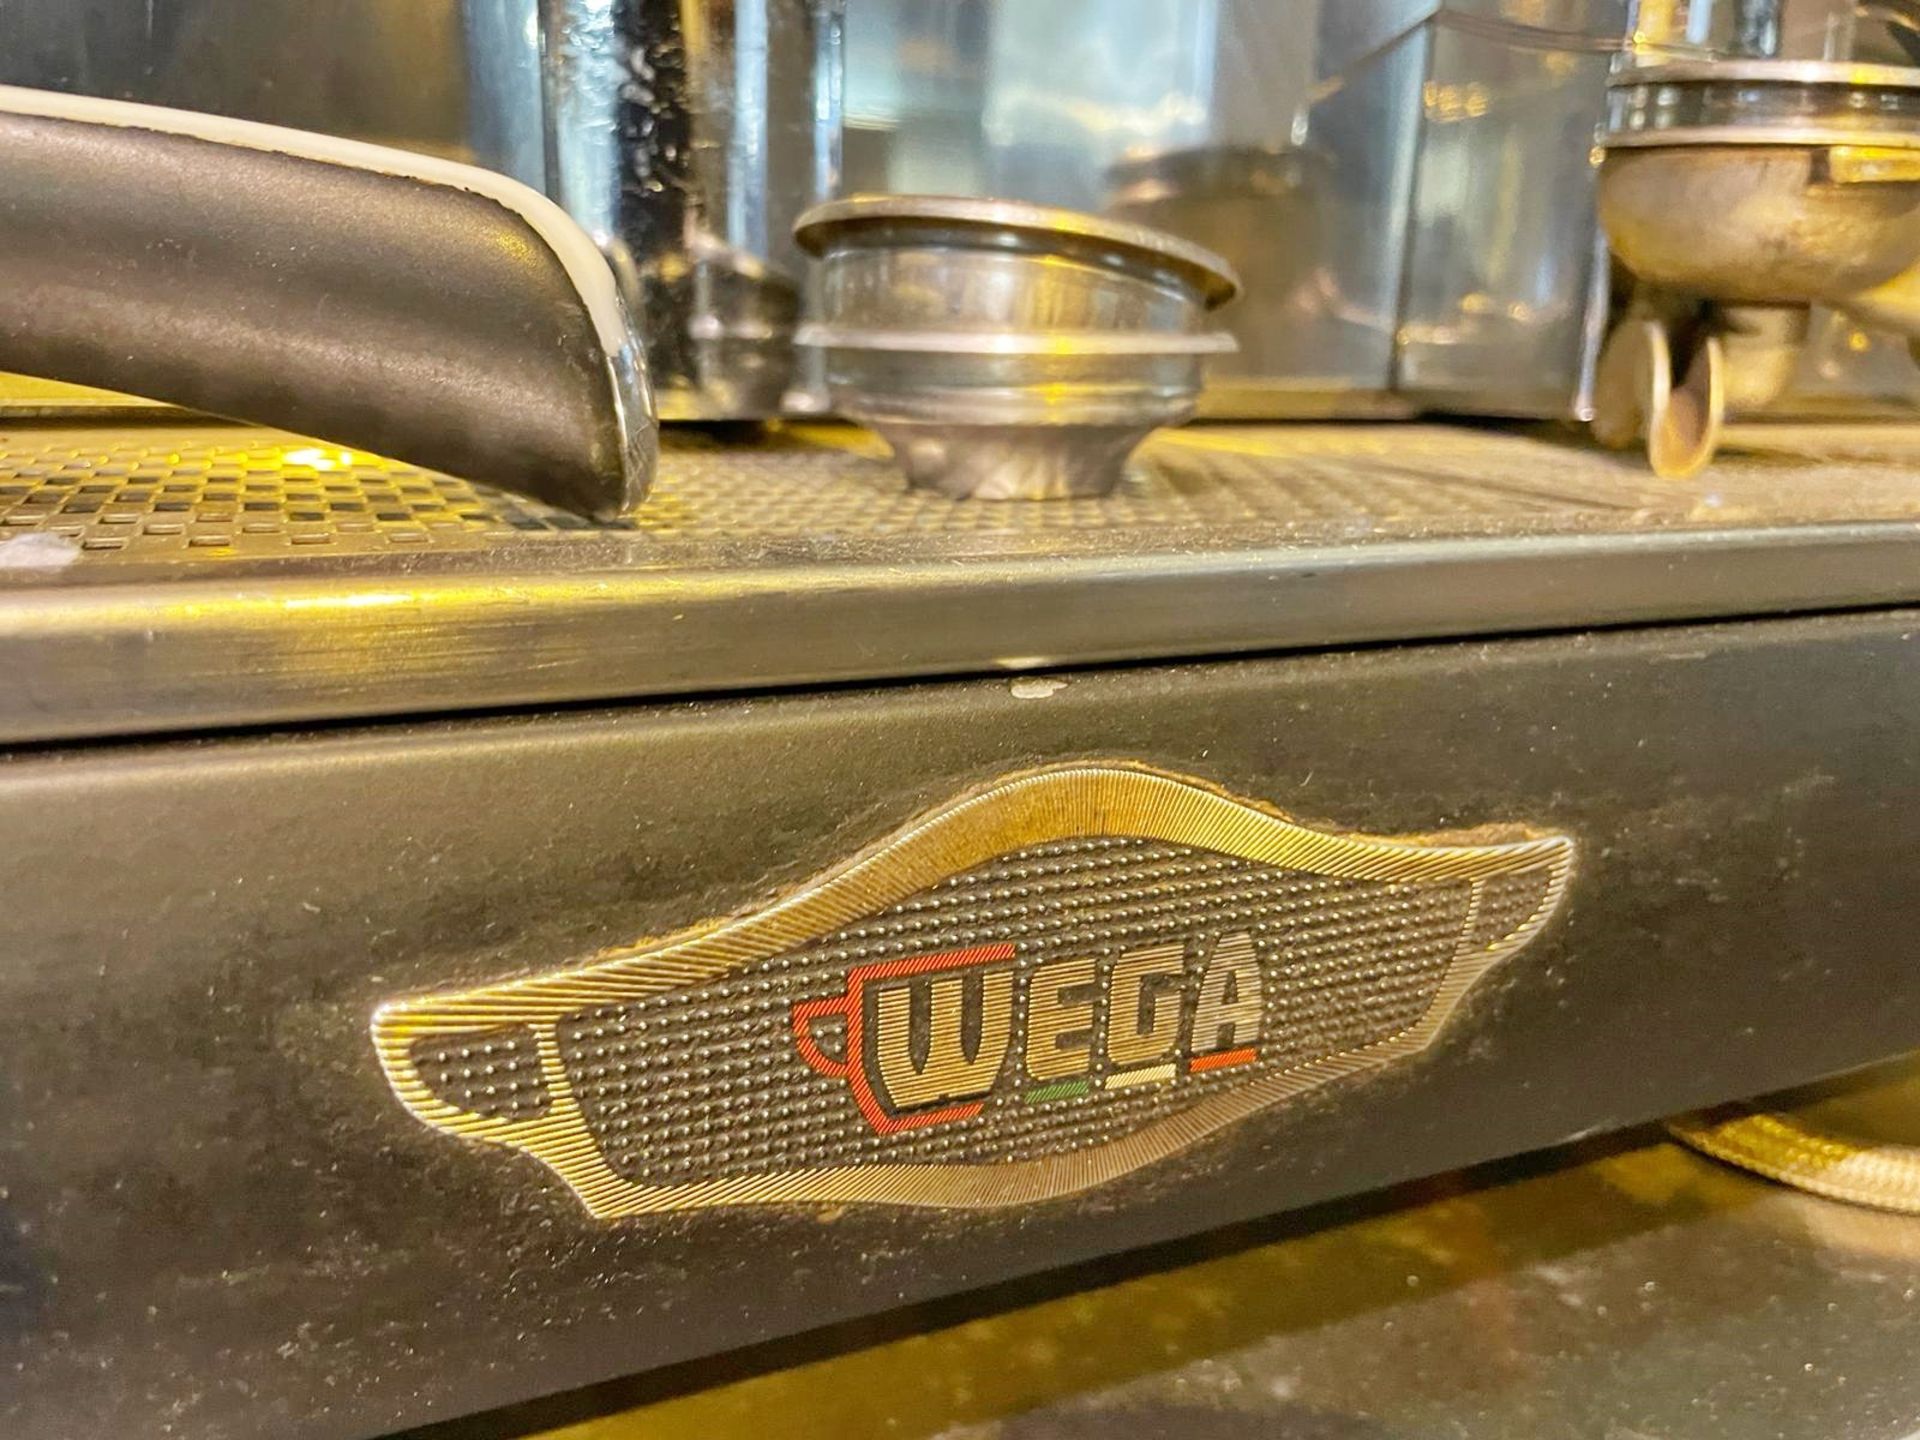 1 x Polaris Wega 3 Group Commercial Espresso Coffee Machine - Stainless Steel / Black Exterior - Image 10 of 11